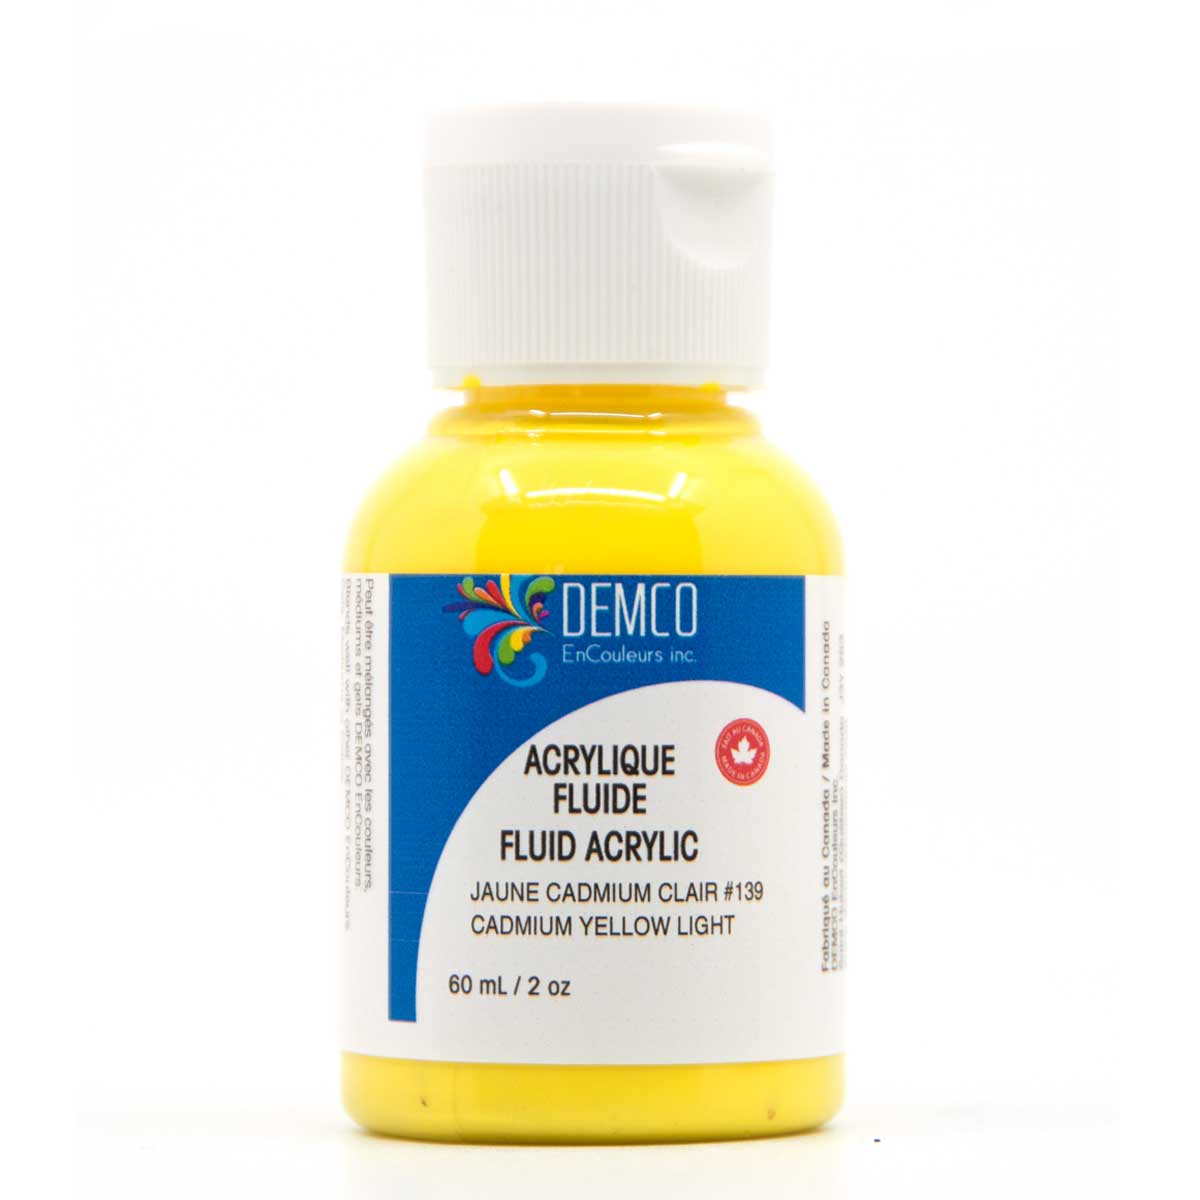 Demco Fluid Acrylic Paint - Cadmium Yellow Light (Hue) 60 ml